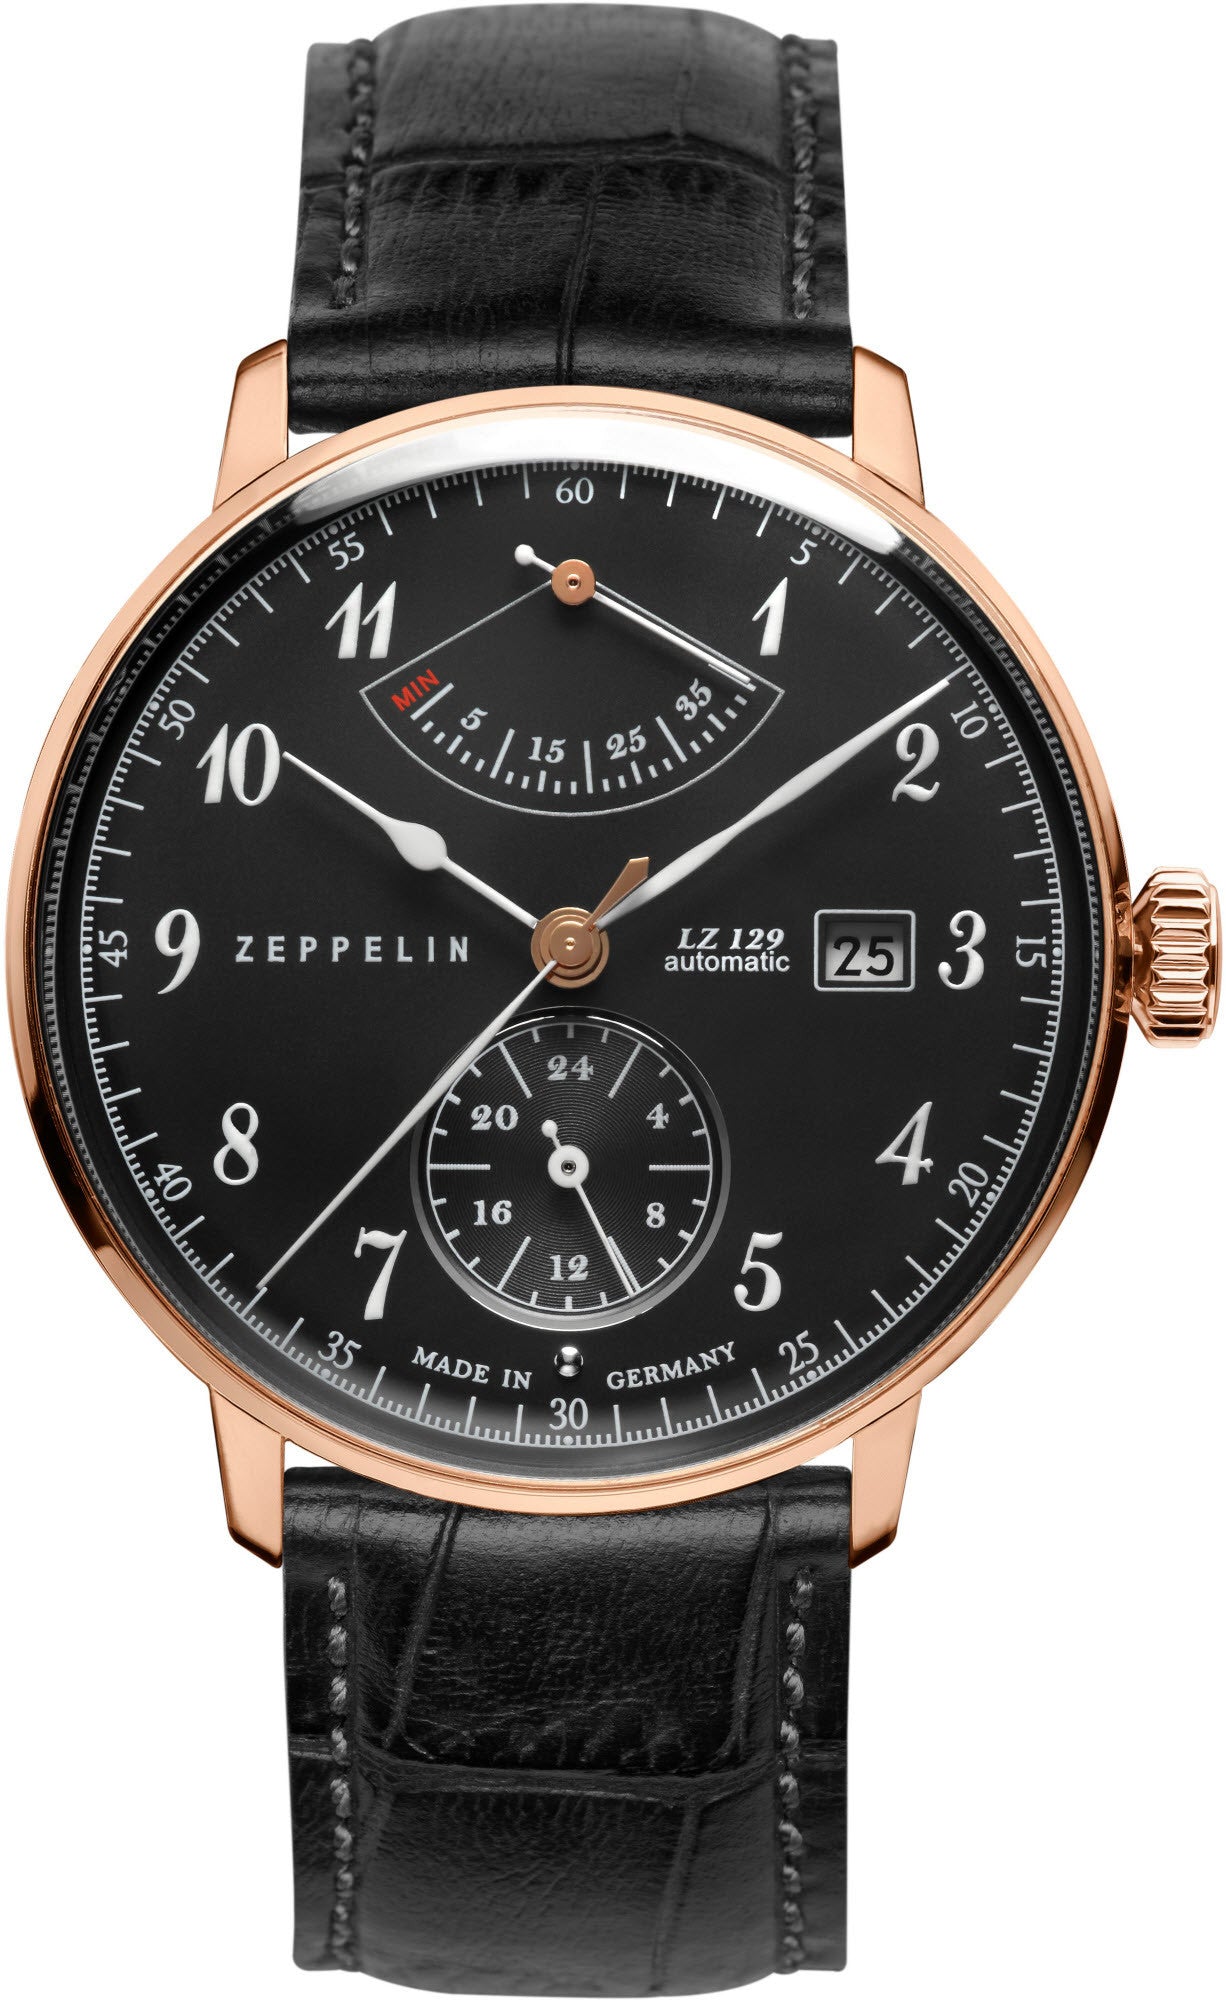 Мужские часы zeppelin. Часы Zeppelin LZ 129. Zeppelin lz129 Hindenburg часы. Наручные часы Zeppelin 70842. Часы Zeppelin 8217.